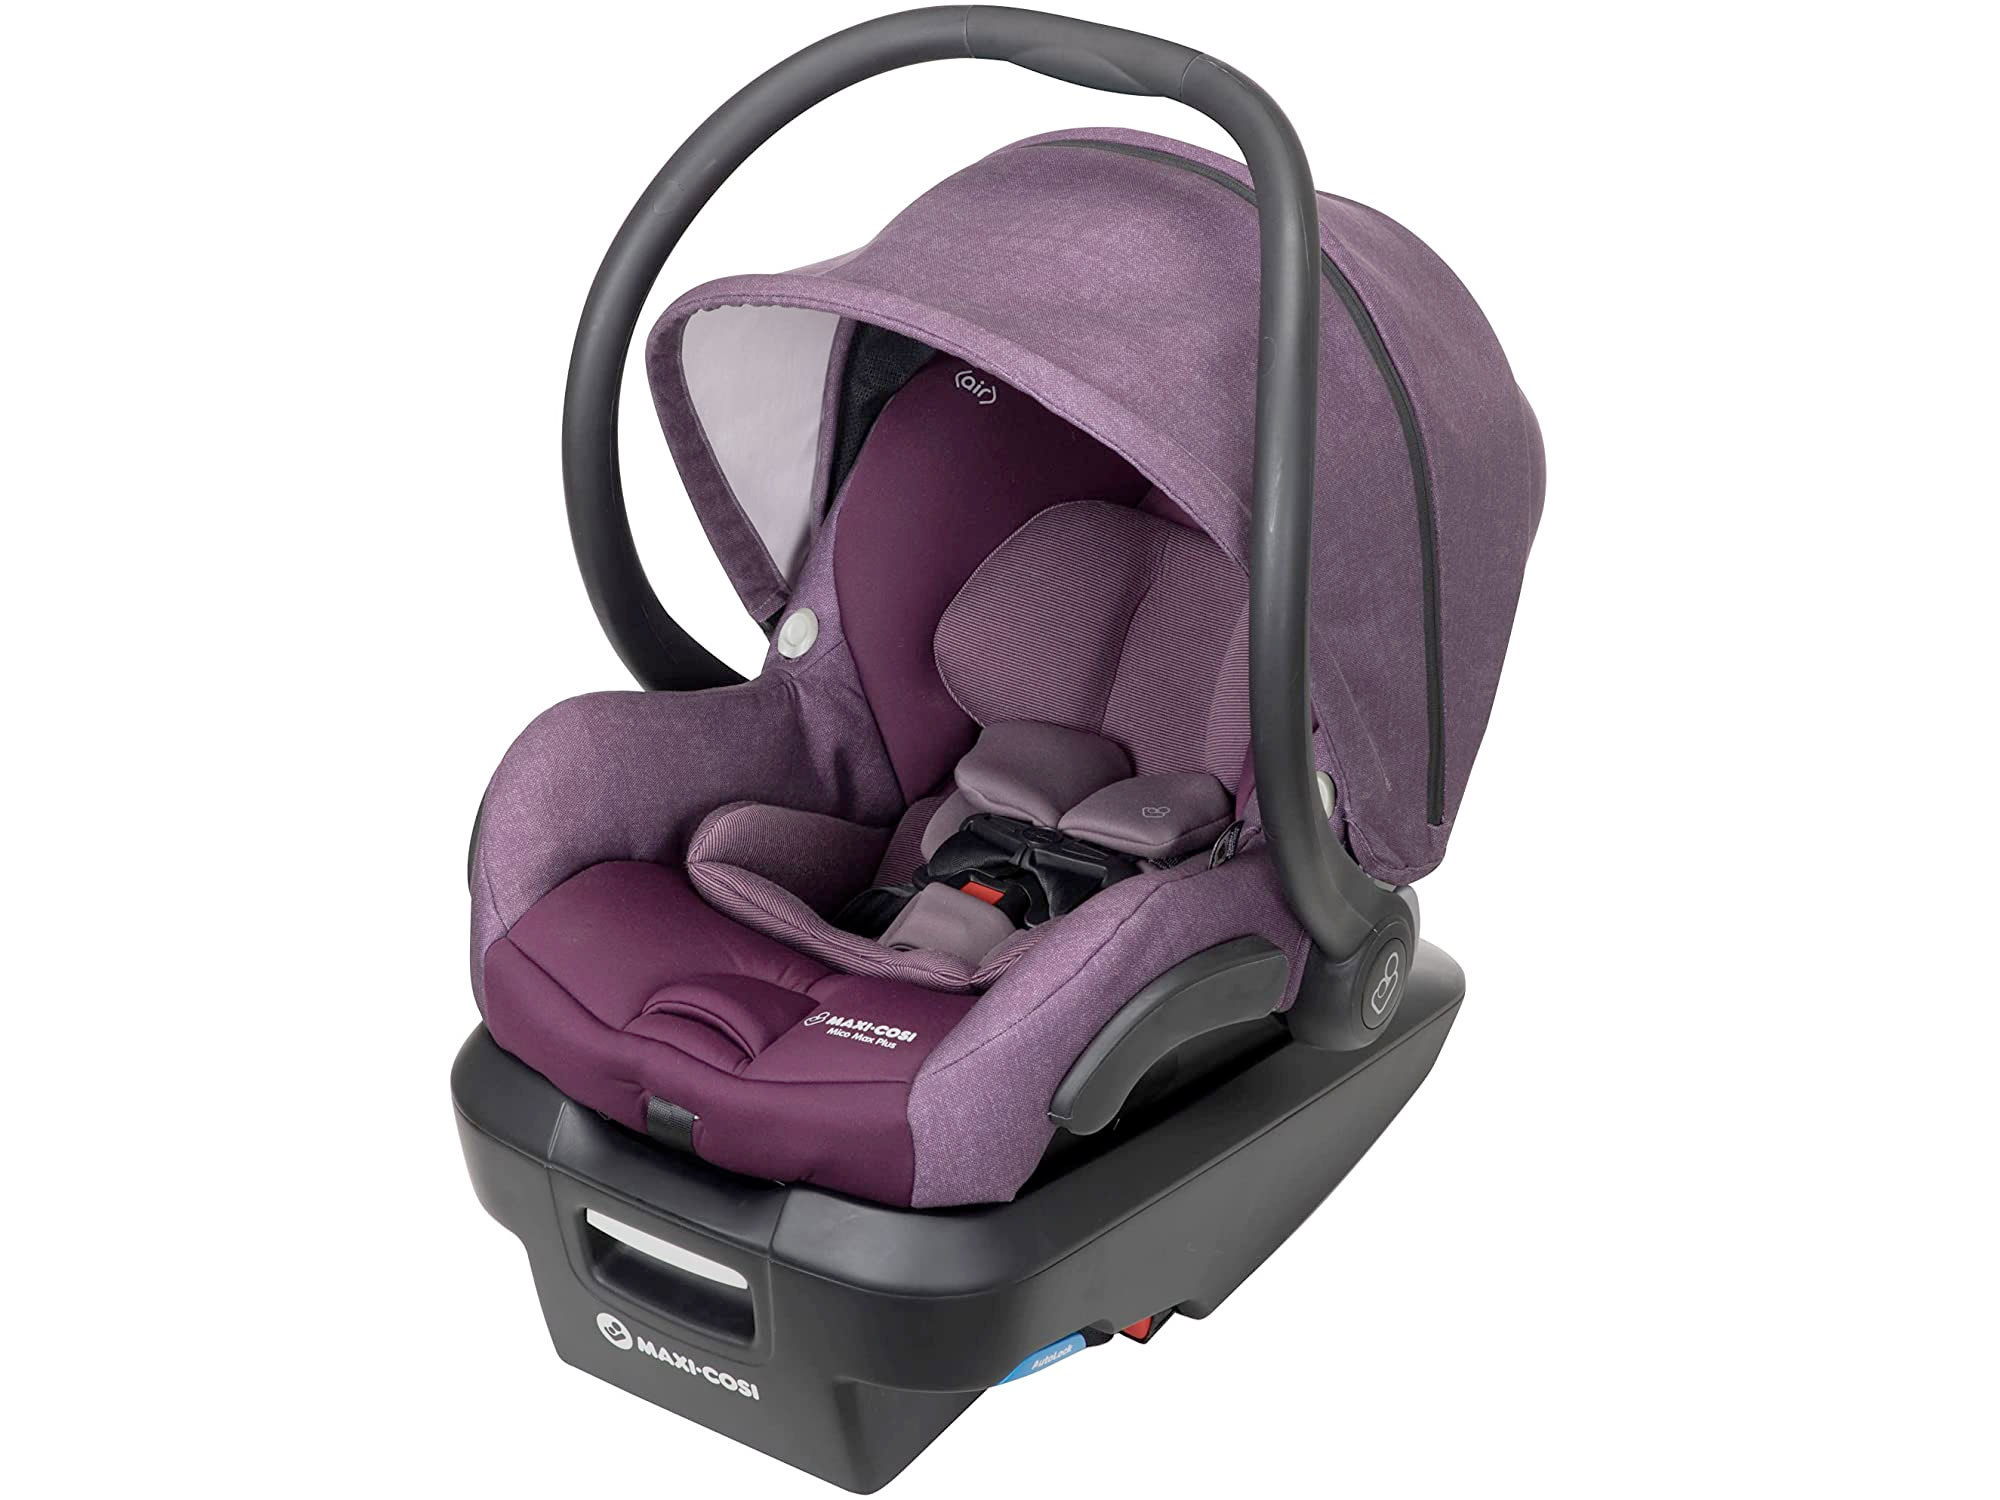 Amazon：Maxi-Cosi Mico Max Plus Infant Car Seat只賣$199.99